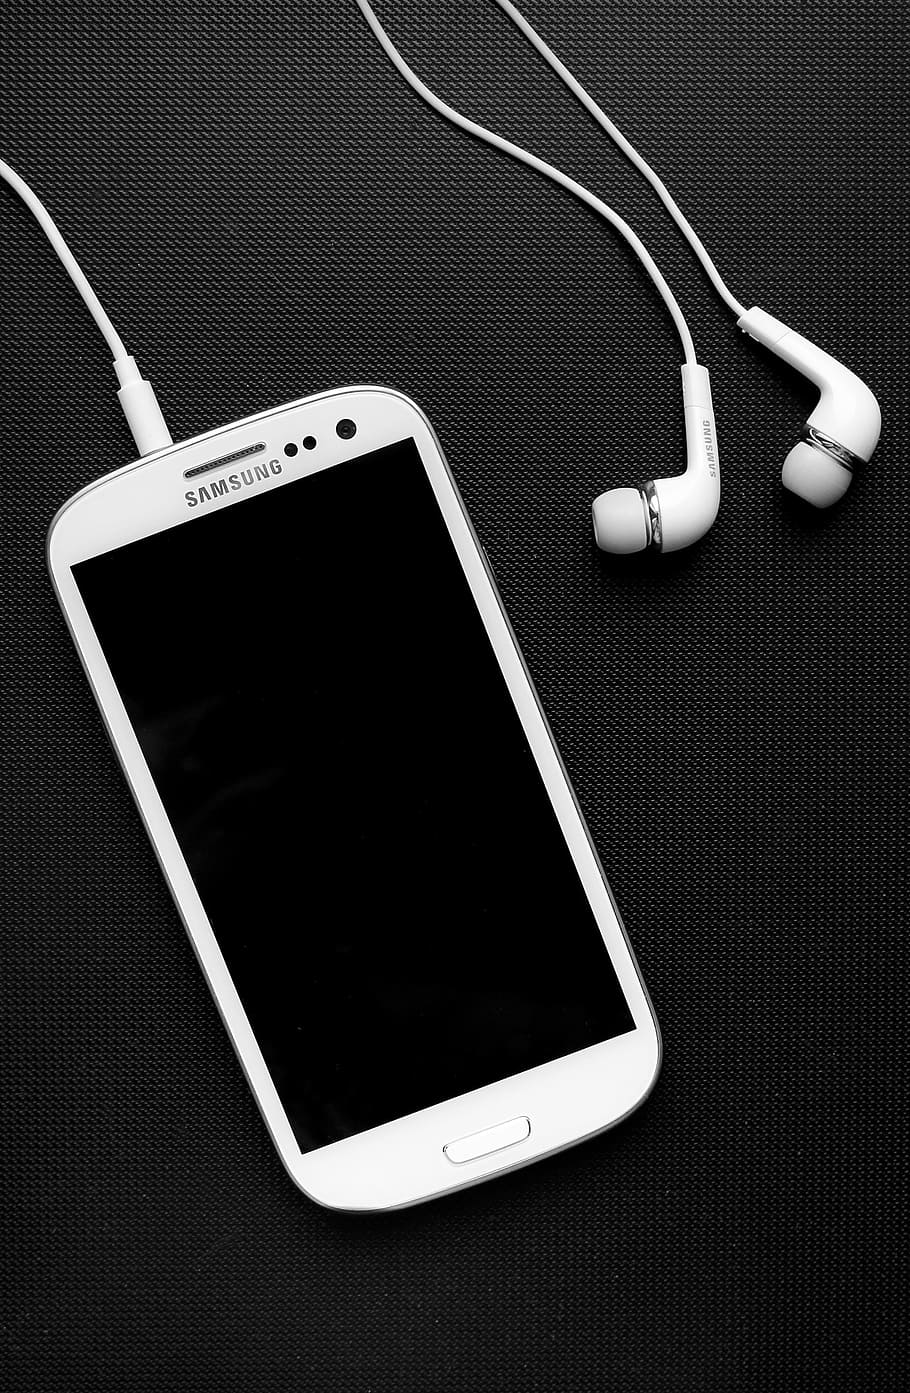 HD wallpaper: white Samsung Galaxy smartphone beside earphones